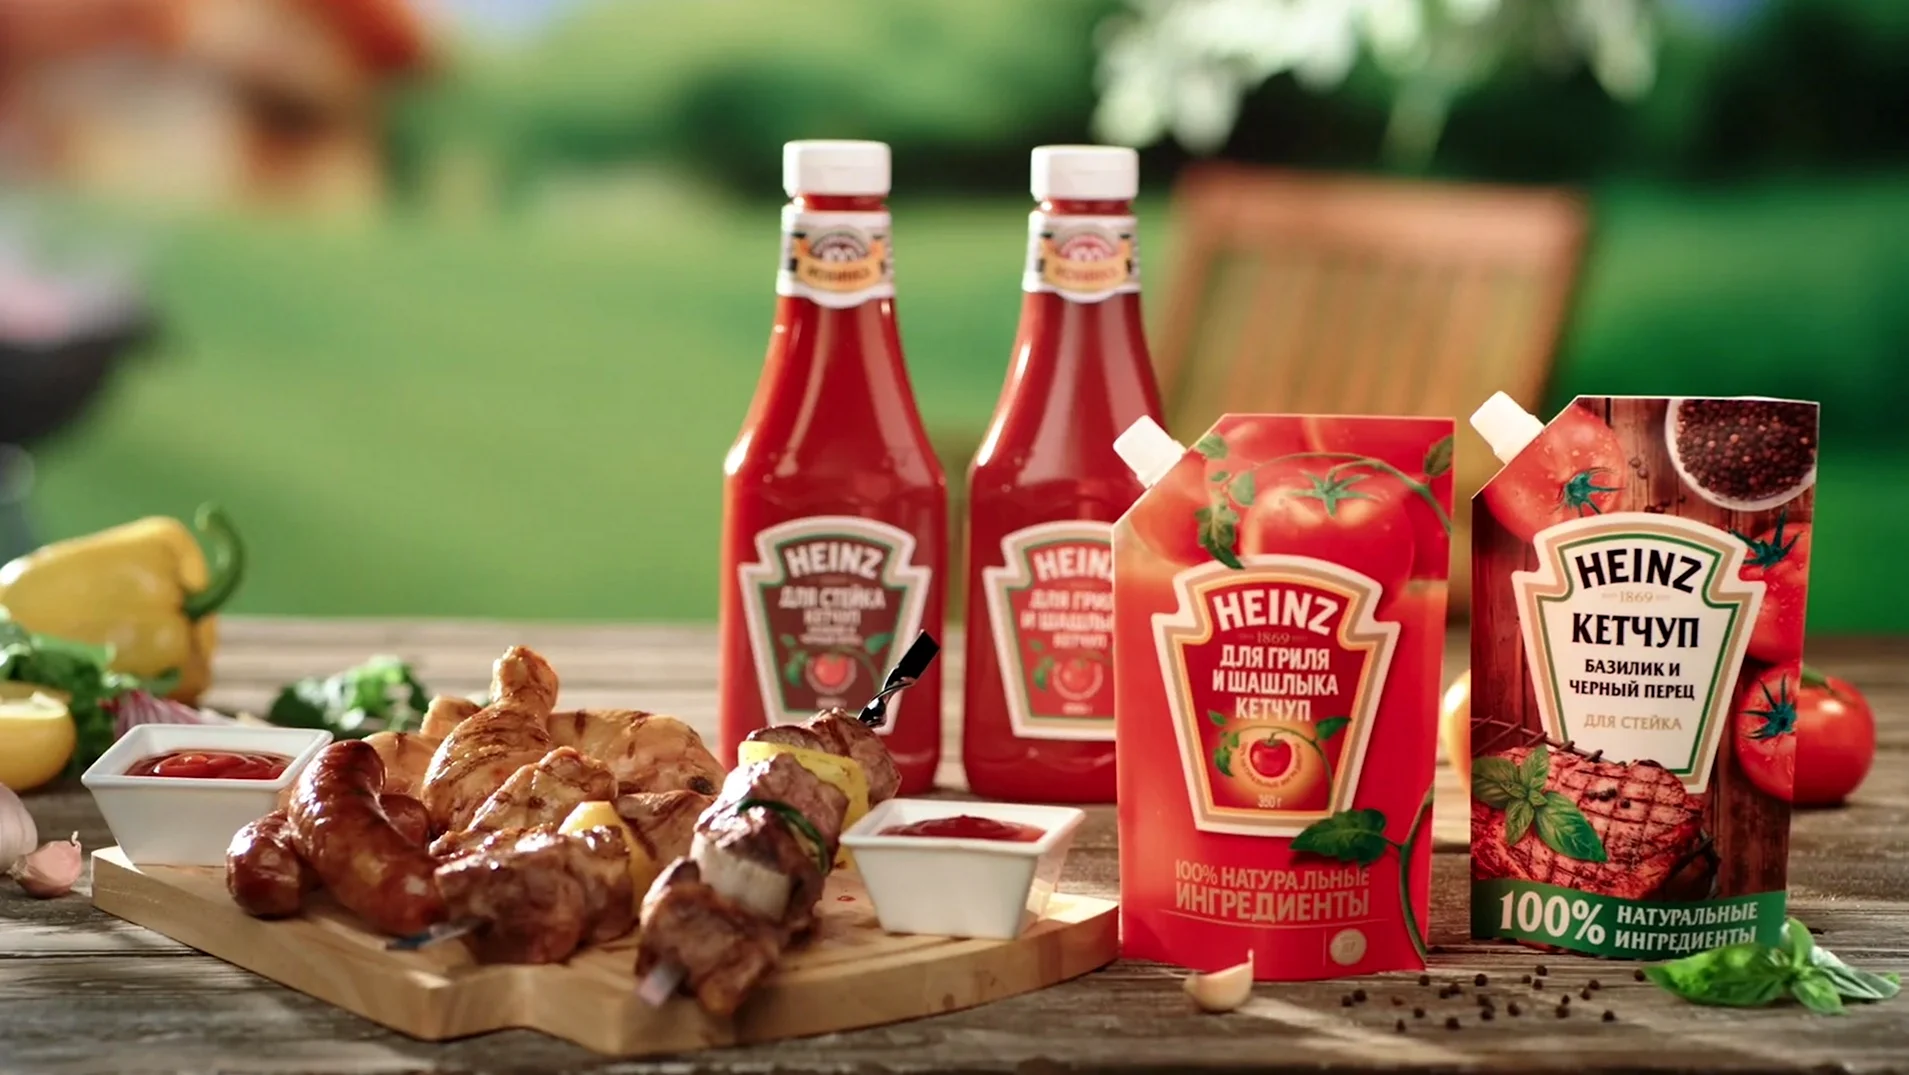 Кетчуп Heinz commercial